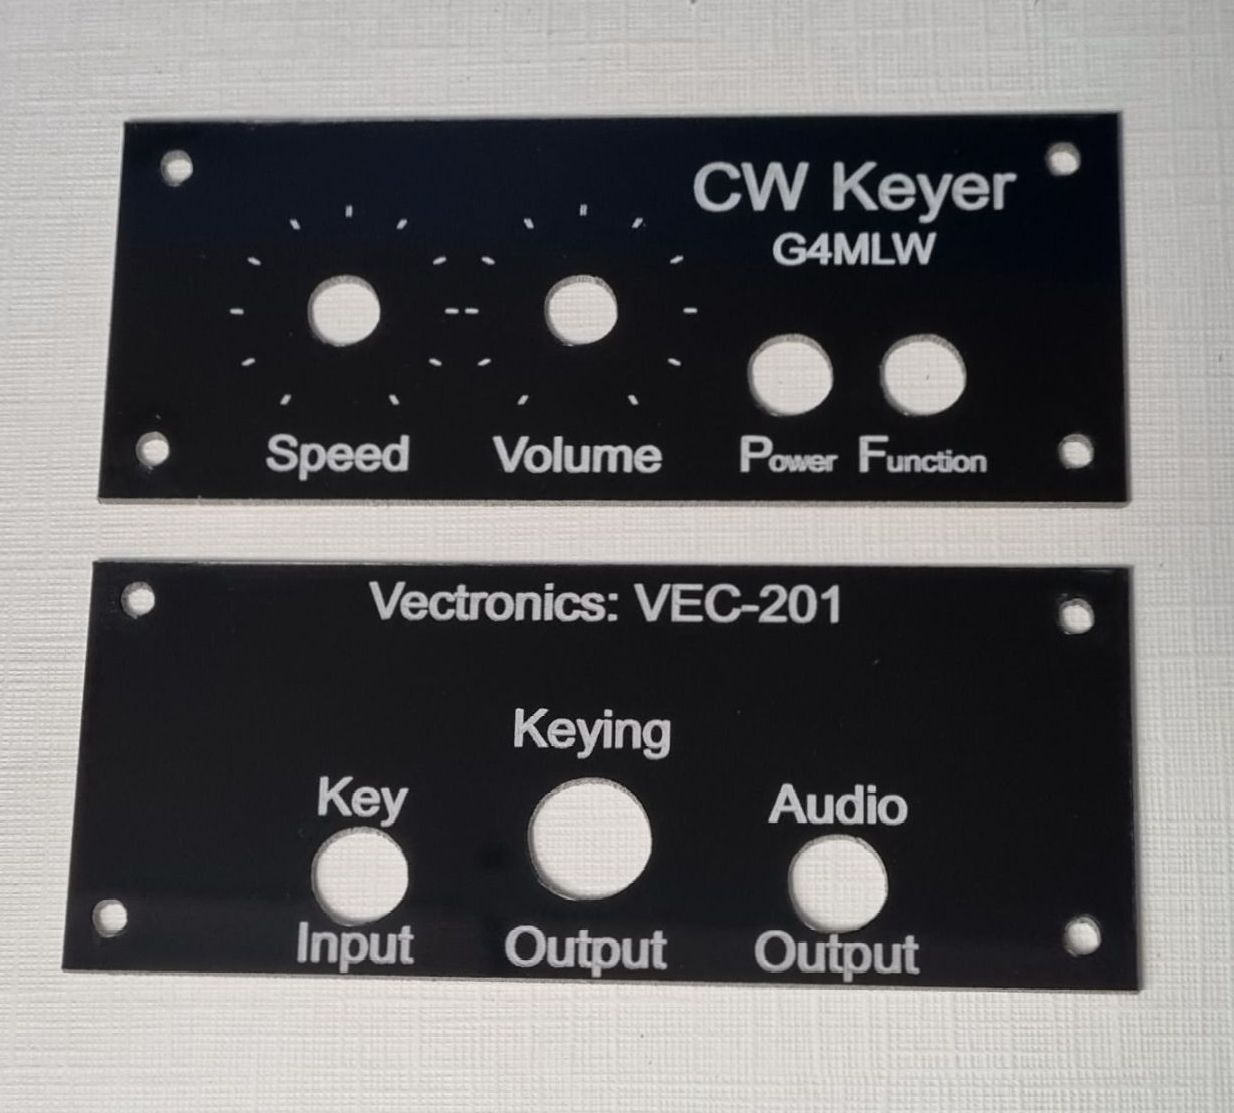 CW Keyer panels